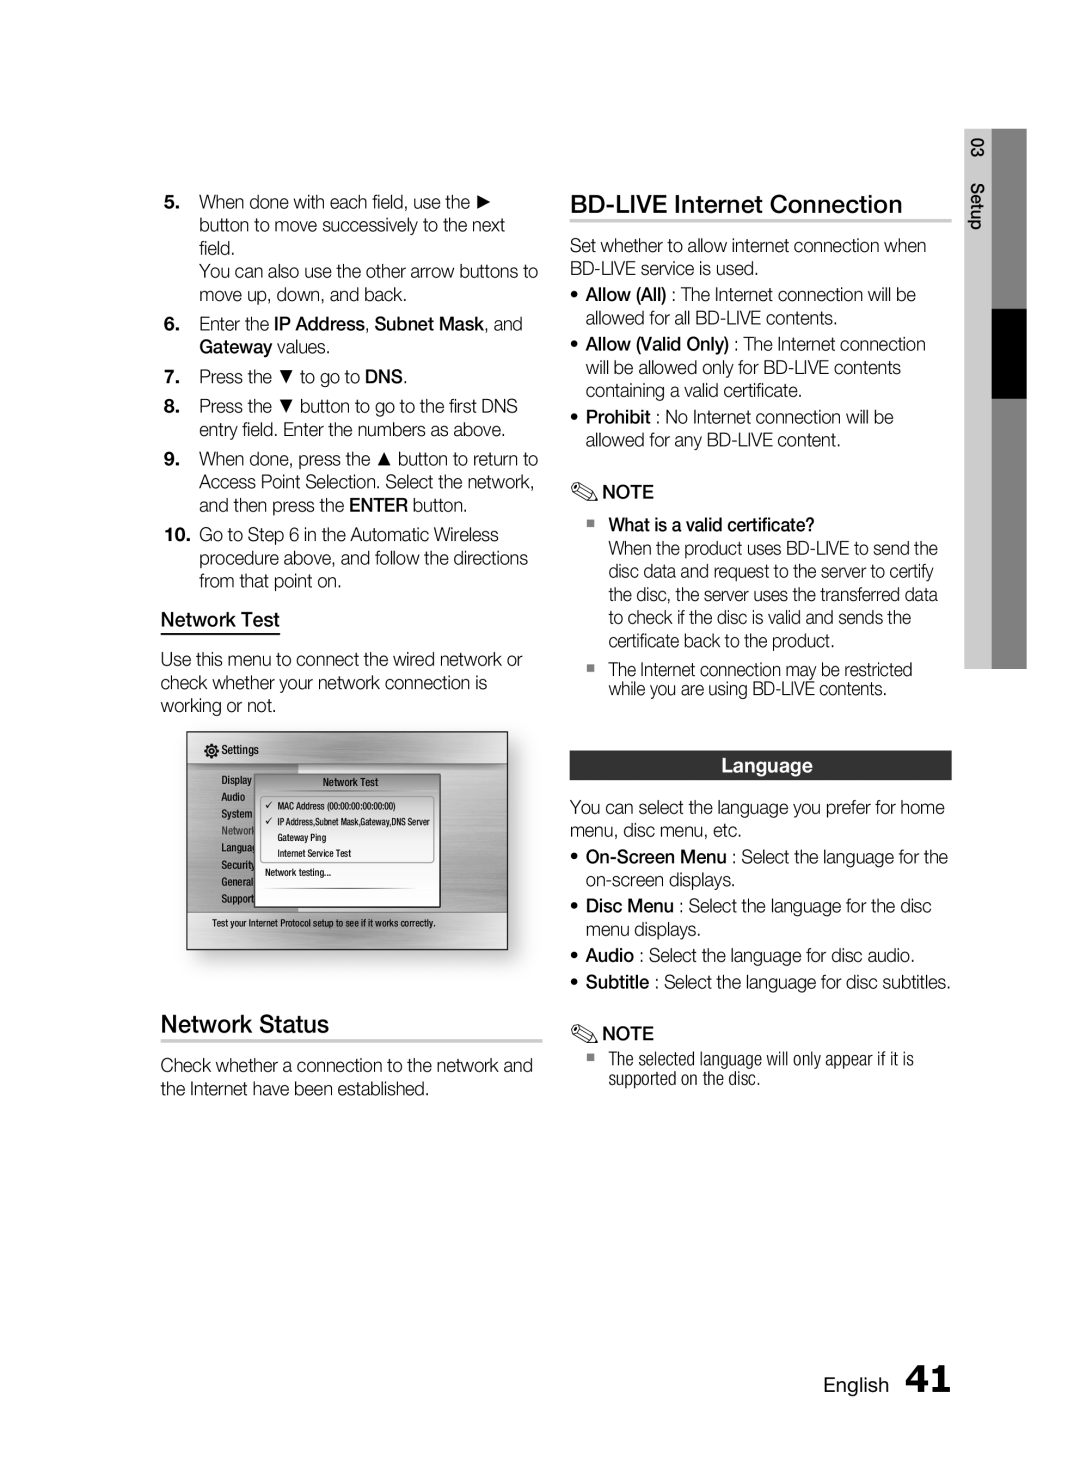 Samsung HT-C6530, AH68-02255S user manual BD-LIVEInternet Connection, Network Status, Network Test, Language, English 